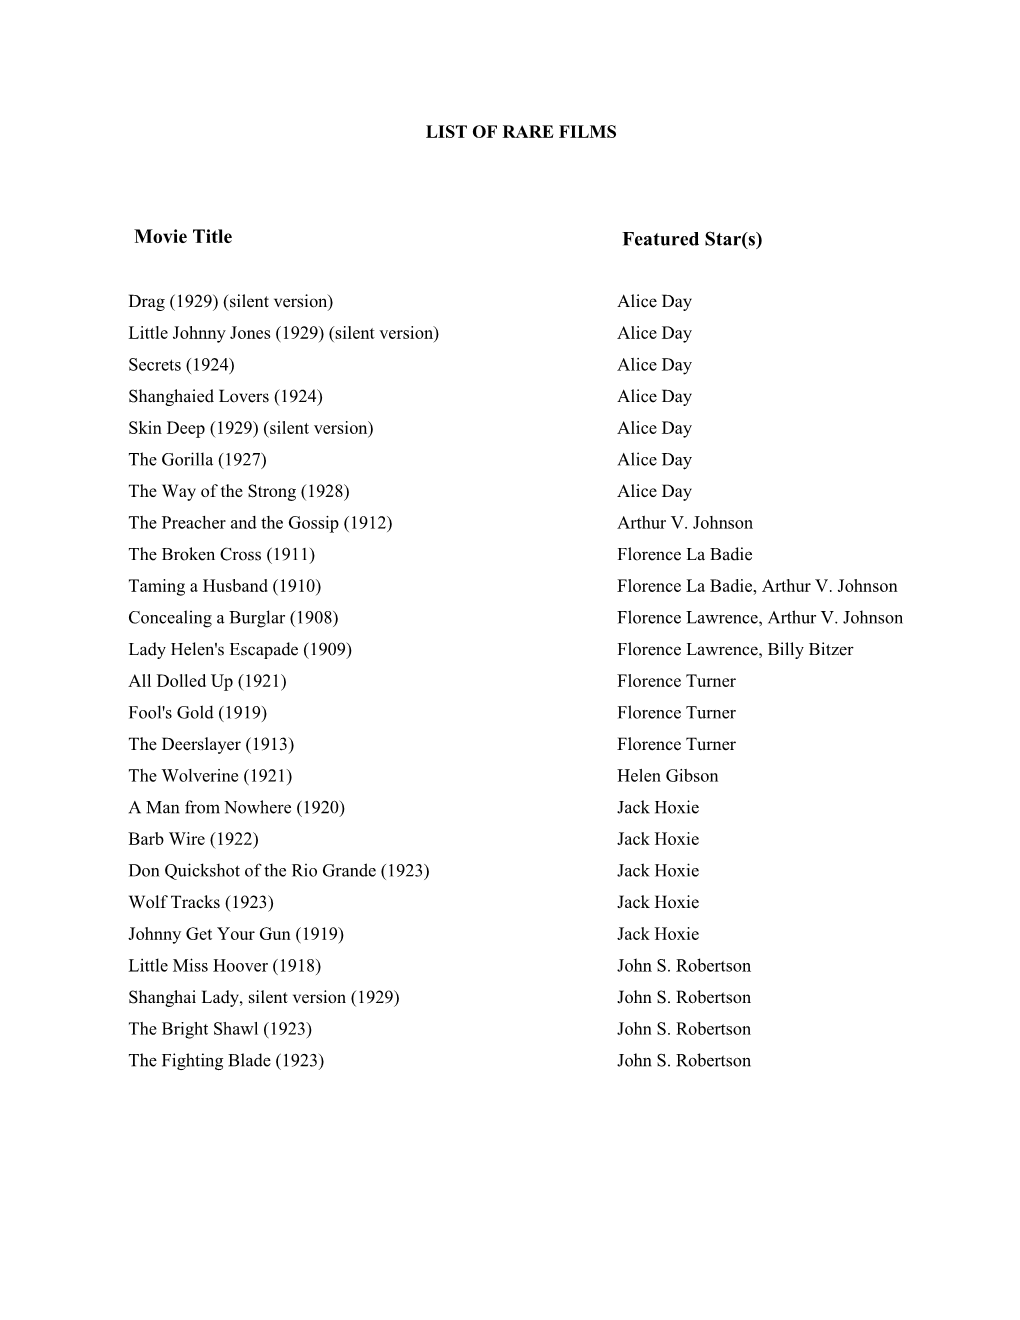 List of Rare Films